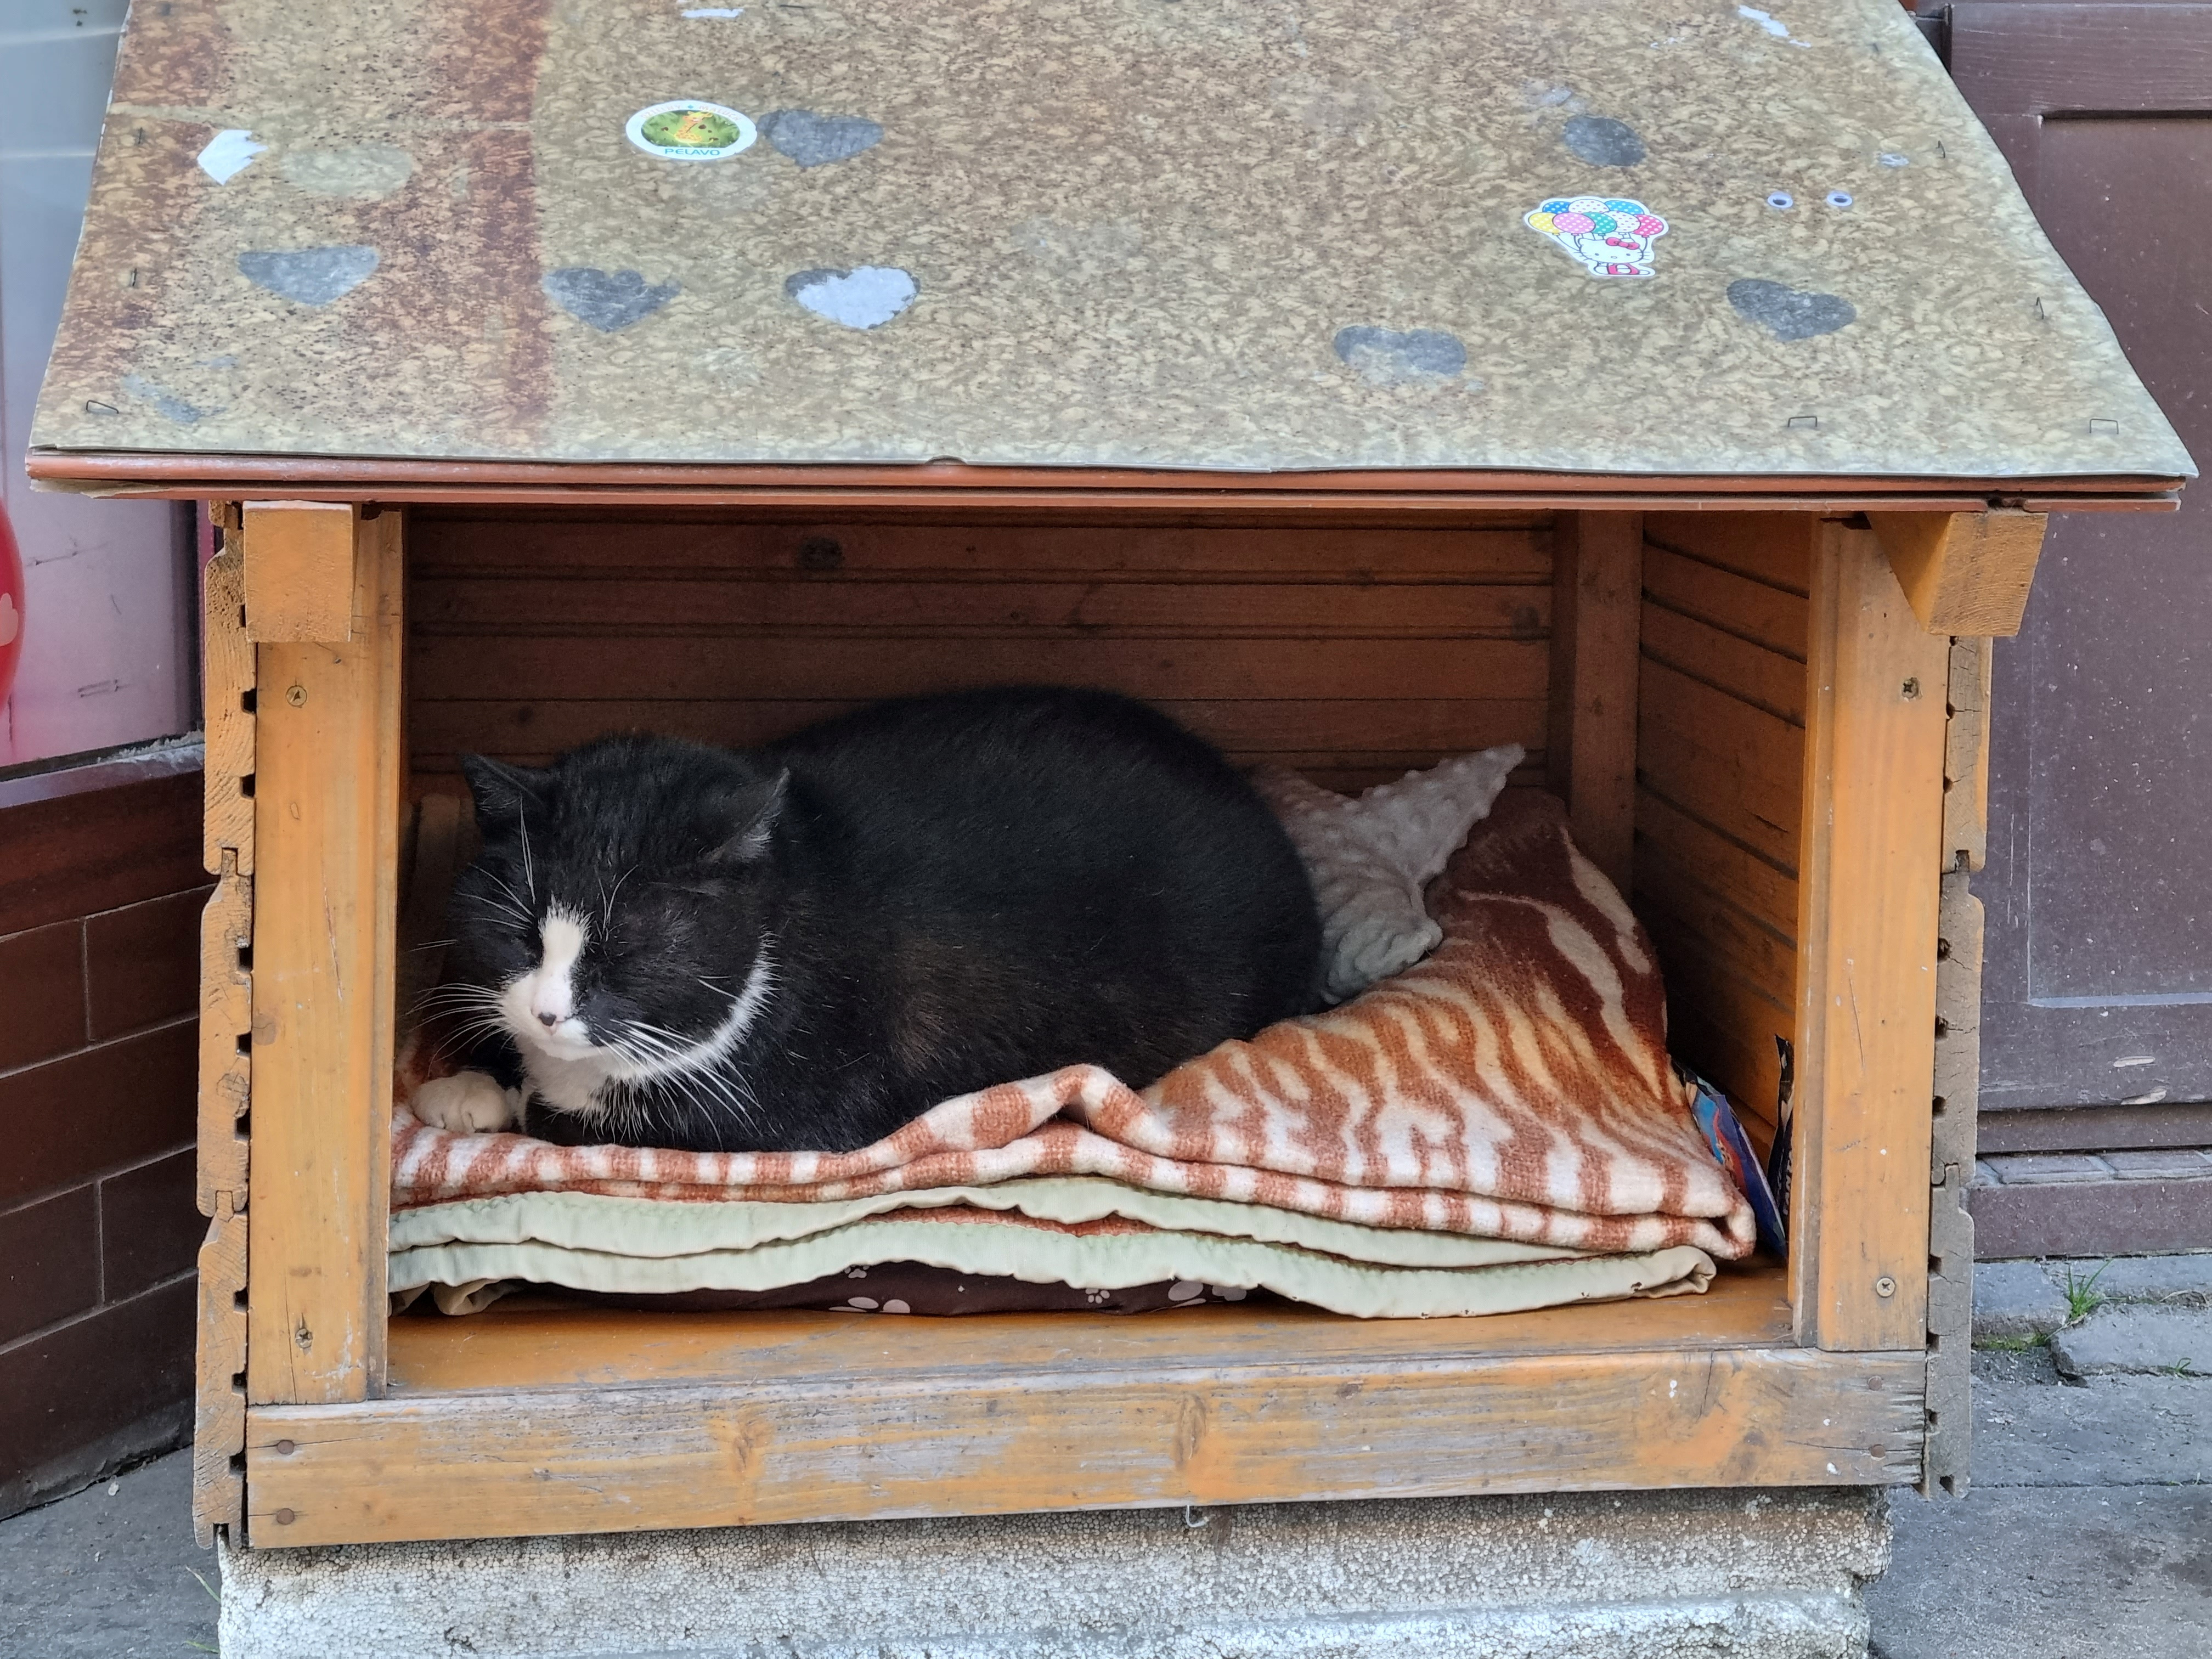 Gacek the cat sits in a small open-fronted wooden box in Szczecin